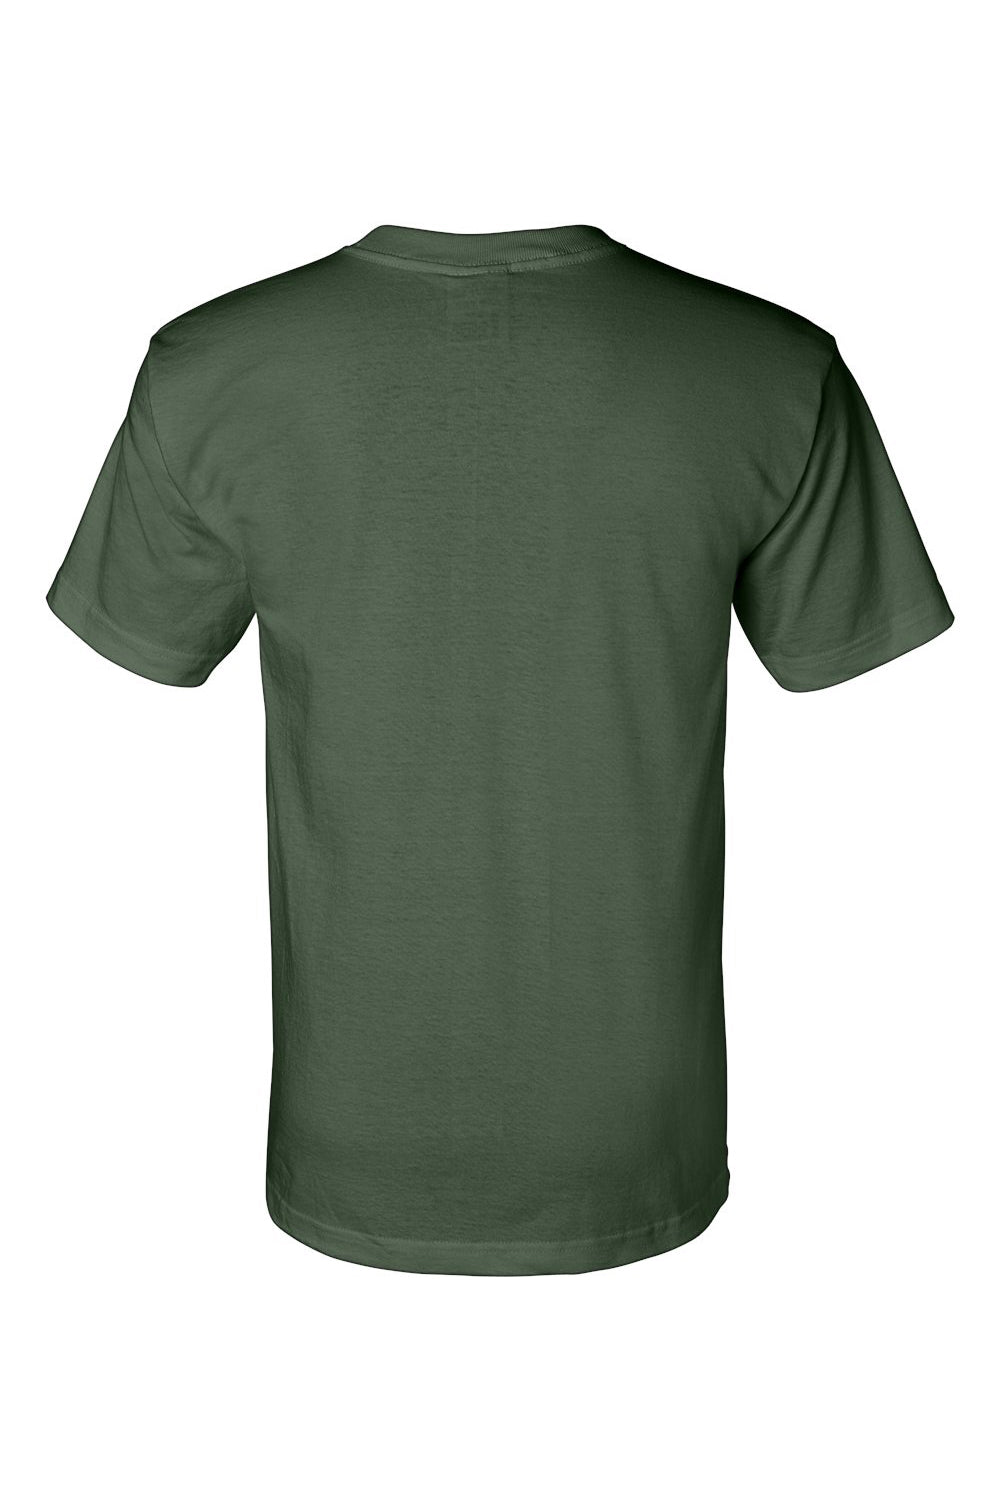 Bayside BA2905 Mens USA Made Short Sleeve Crewneck T-Shirt Forest Green Flat Back